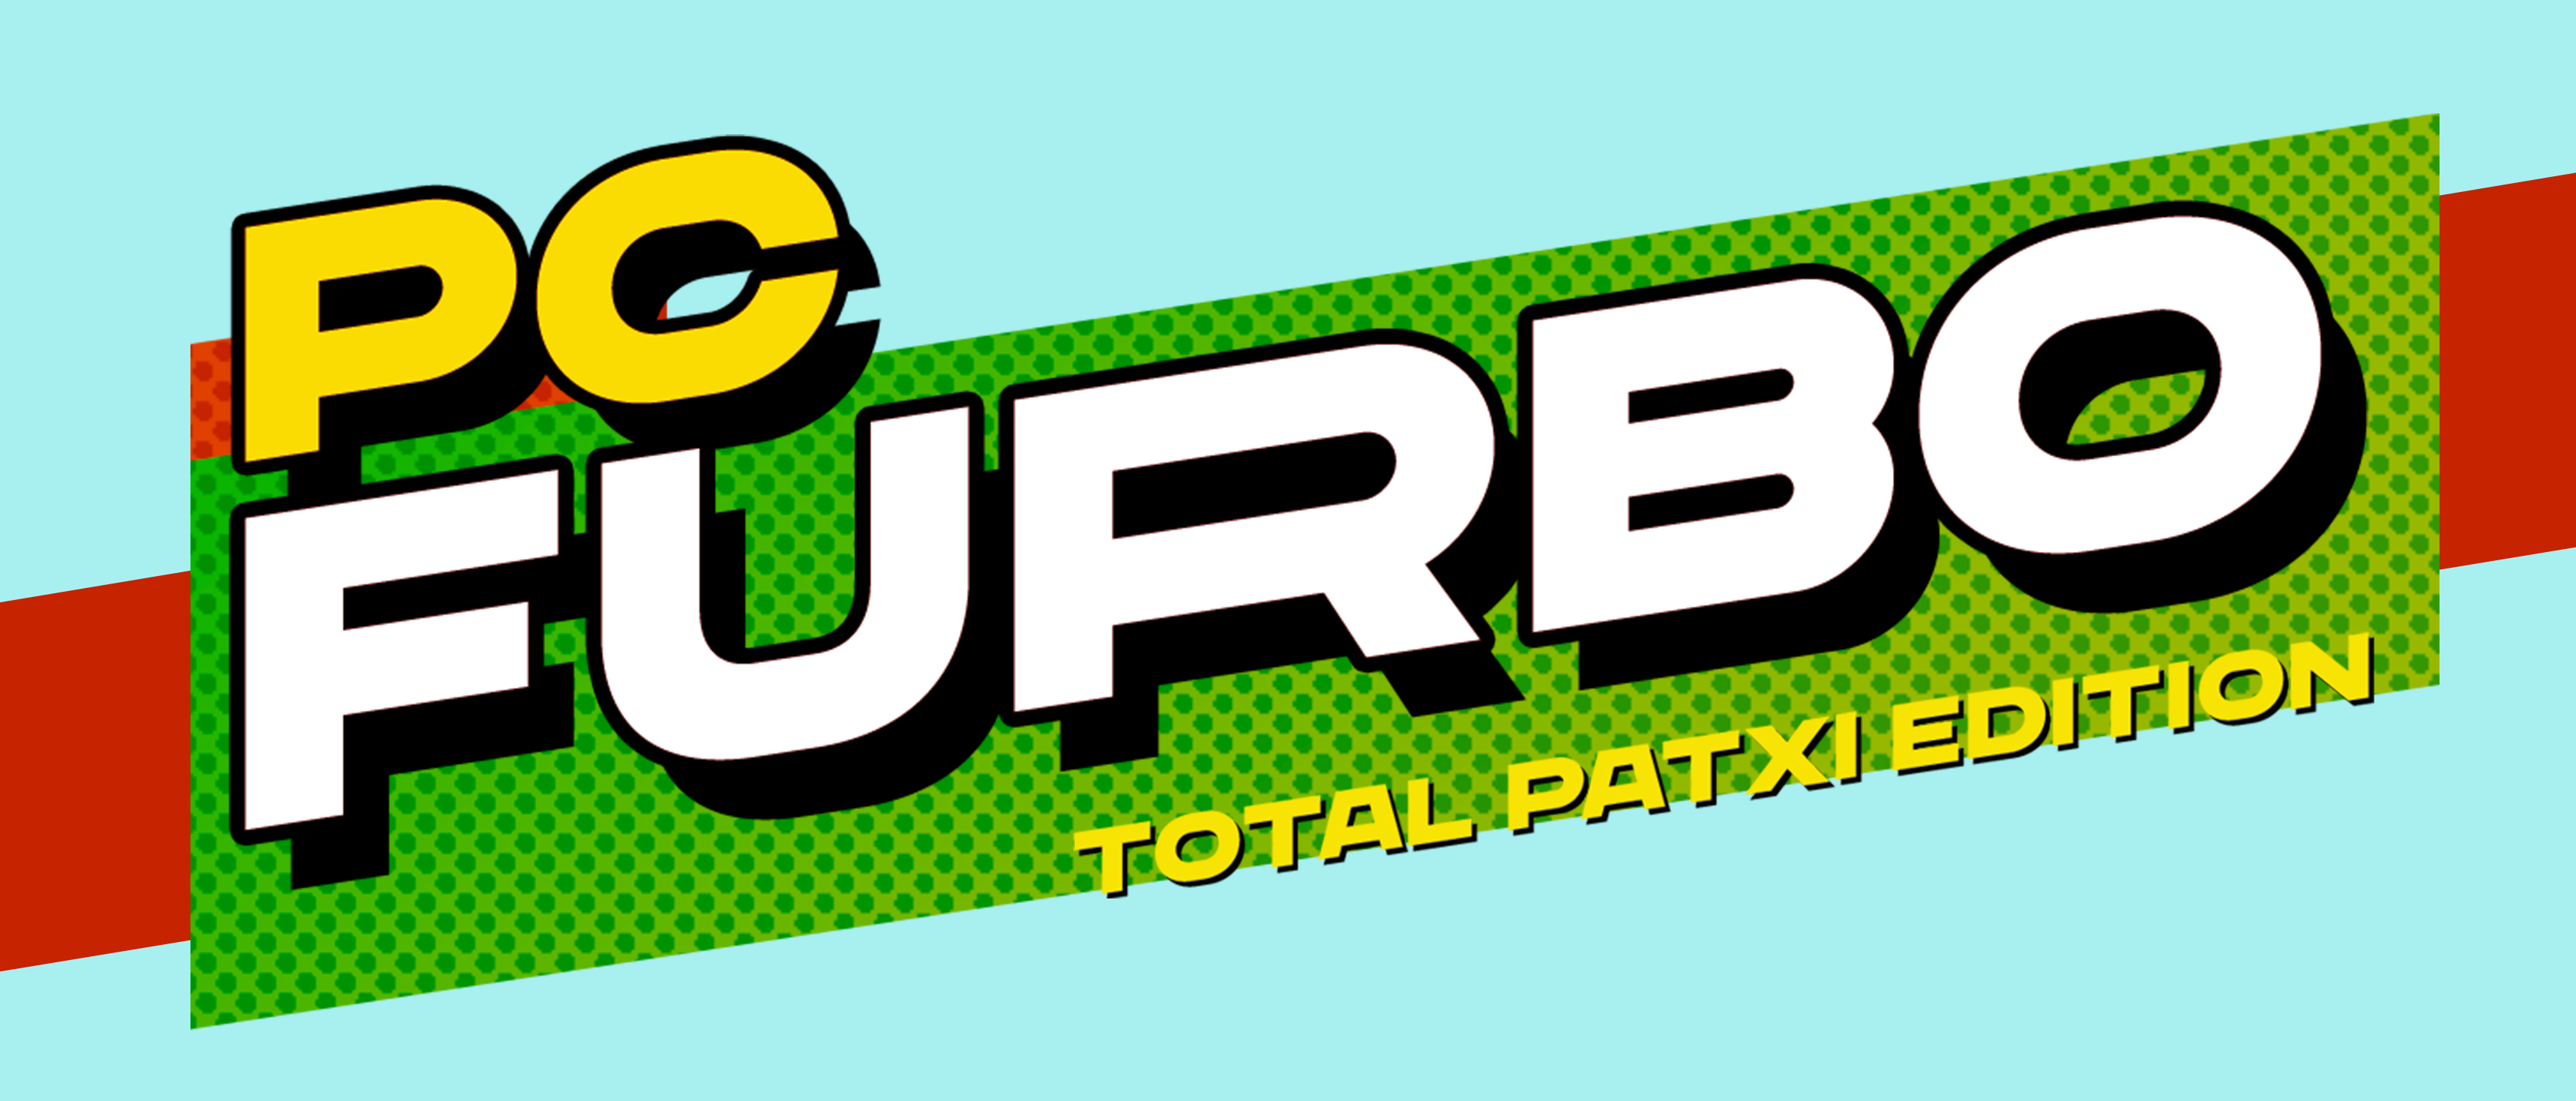 PC Furbo 2024 Total Patxi Edition